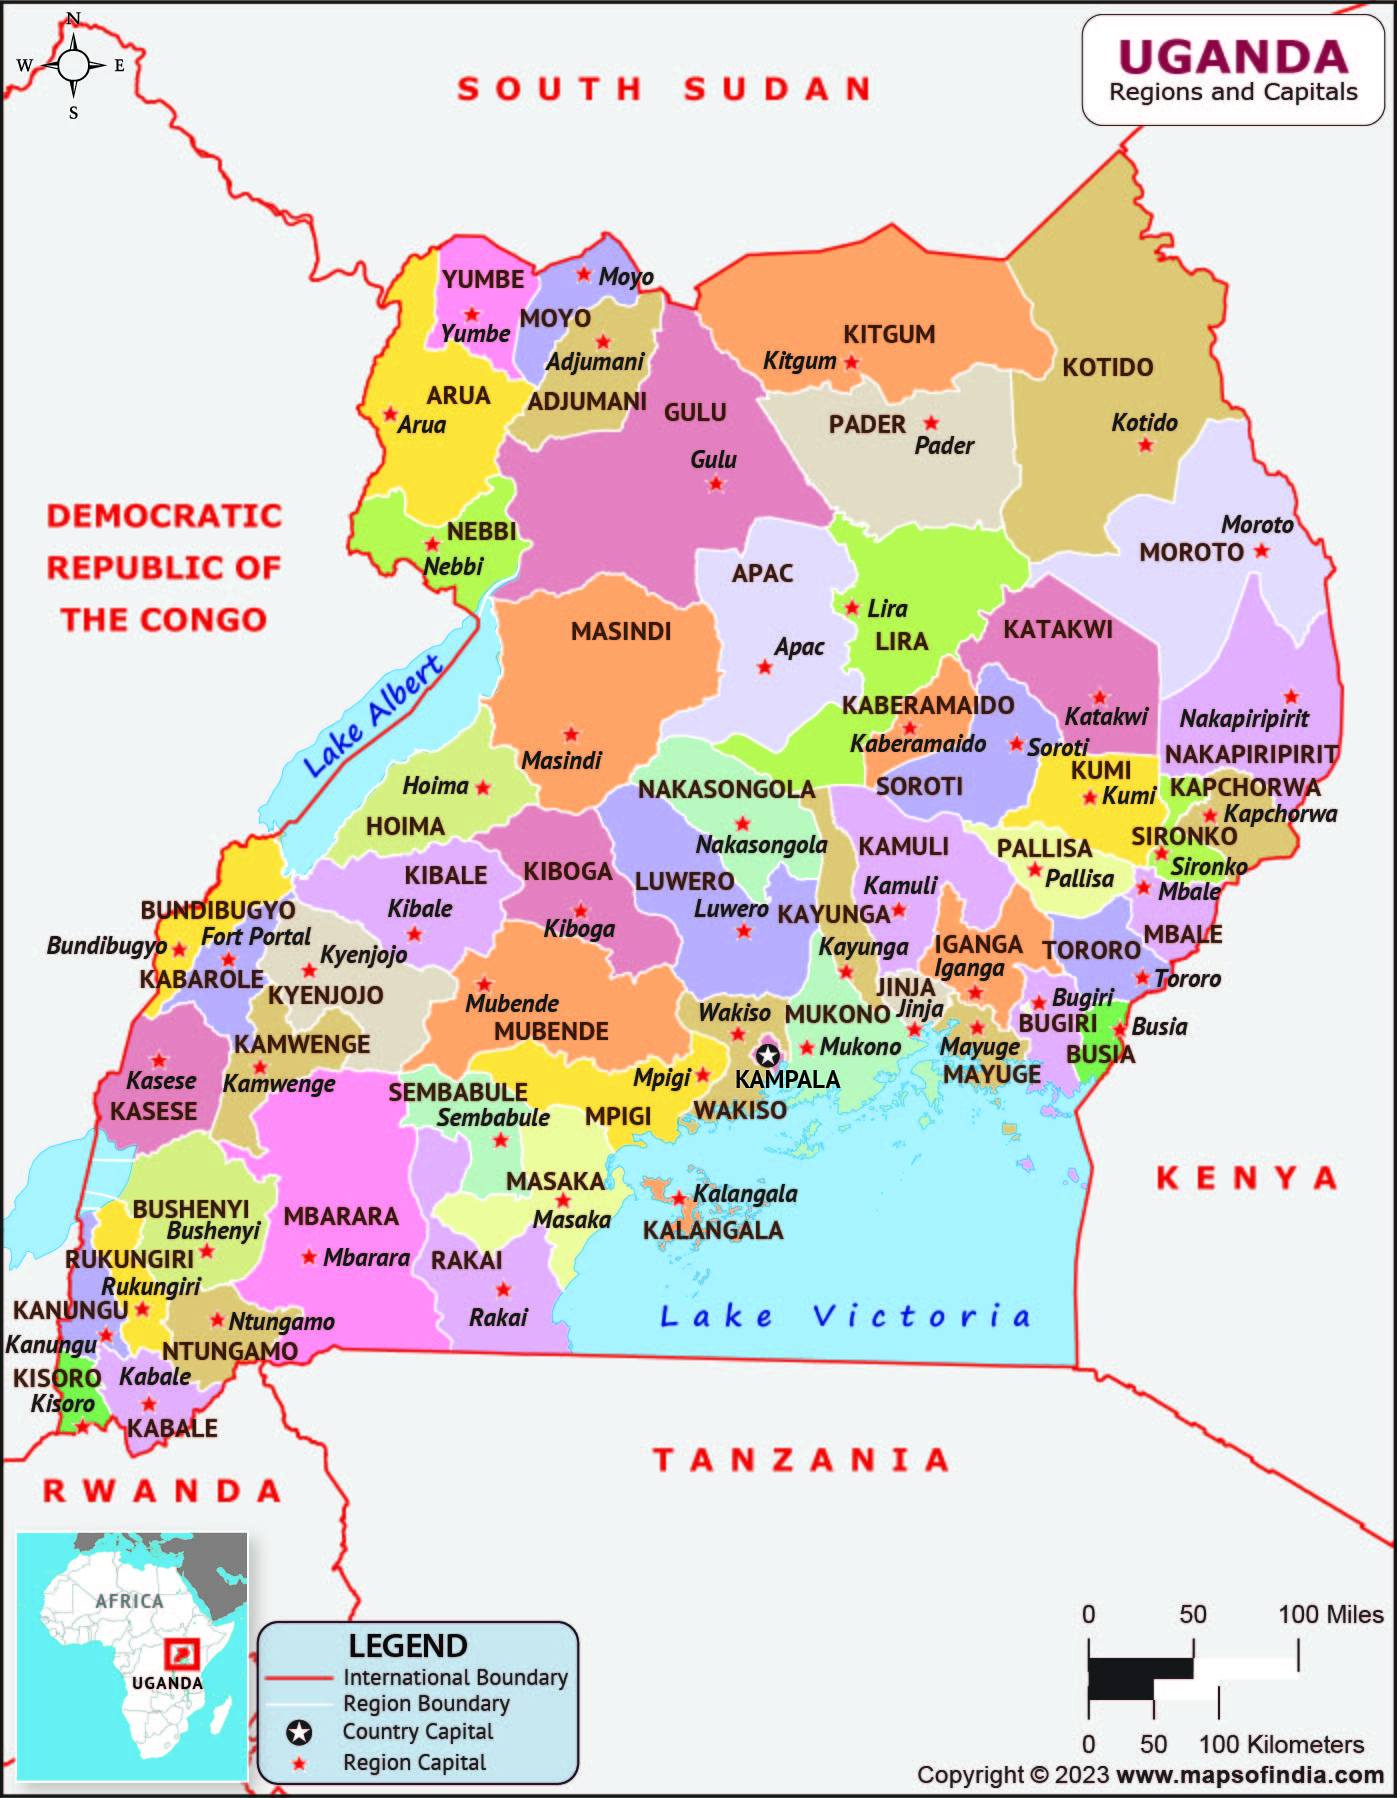 Uganda Regions and Capital Map